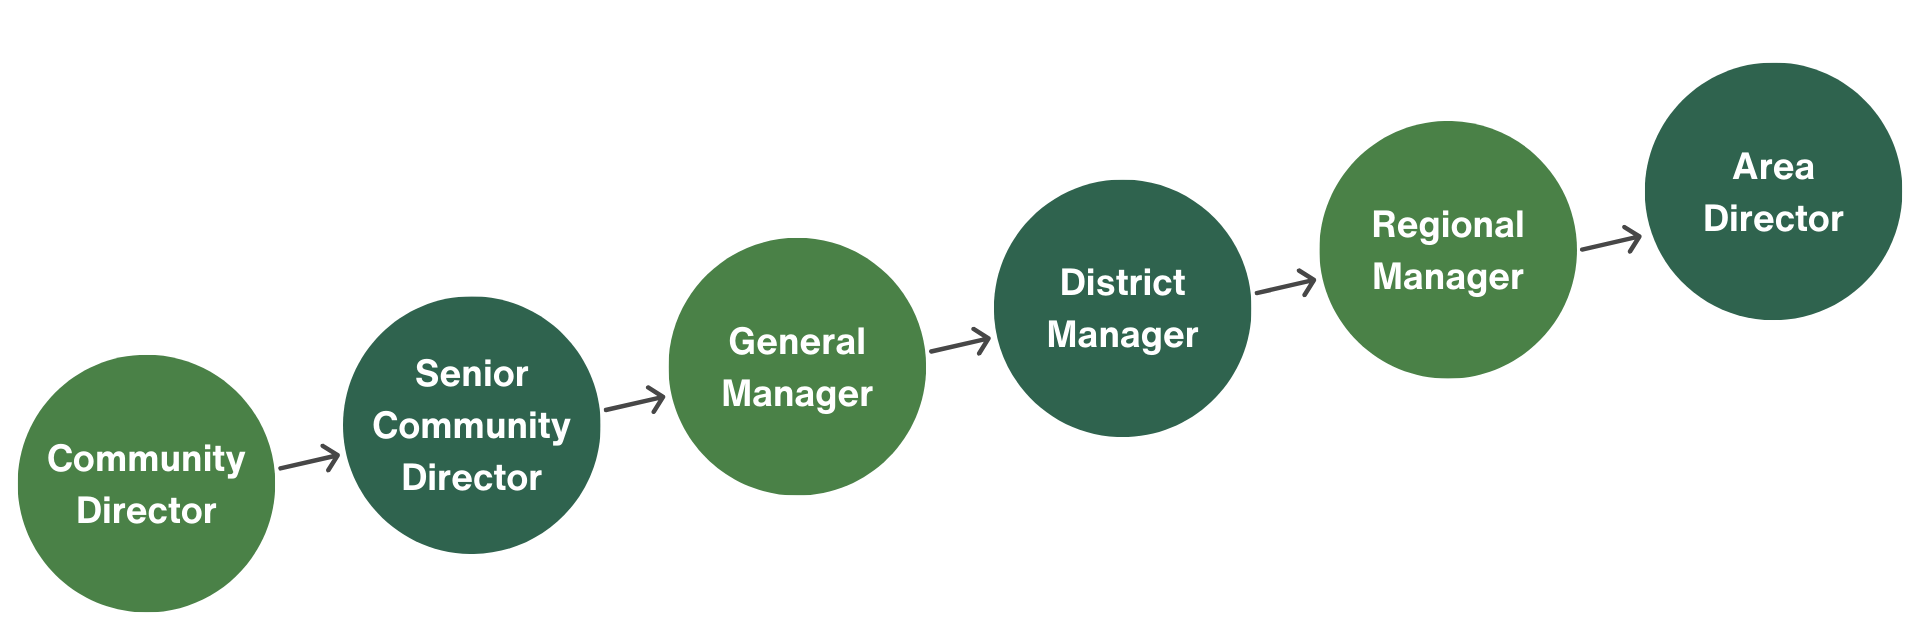 Property Management Path: Community Director, Senior Community Director, General Manager, District Manager, Regional Manager, Area Director